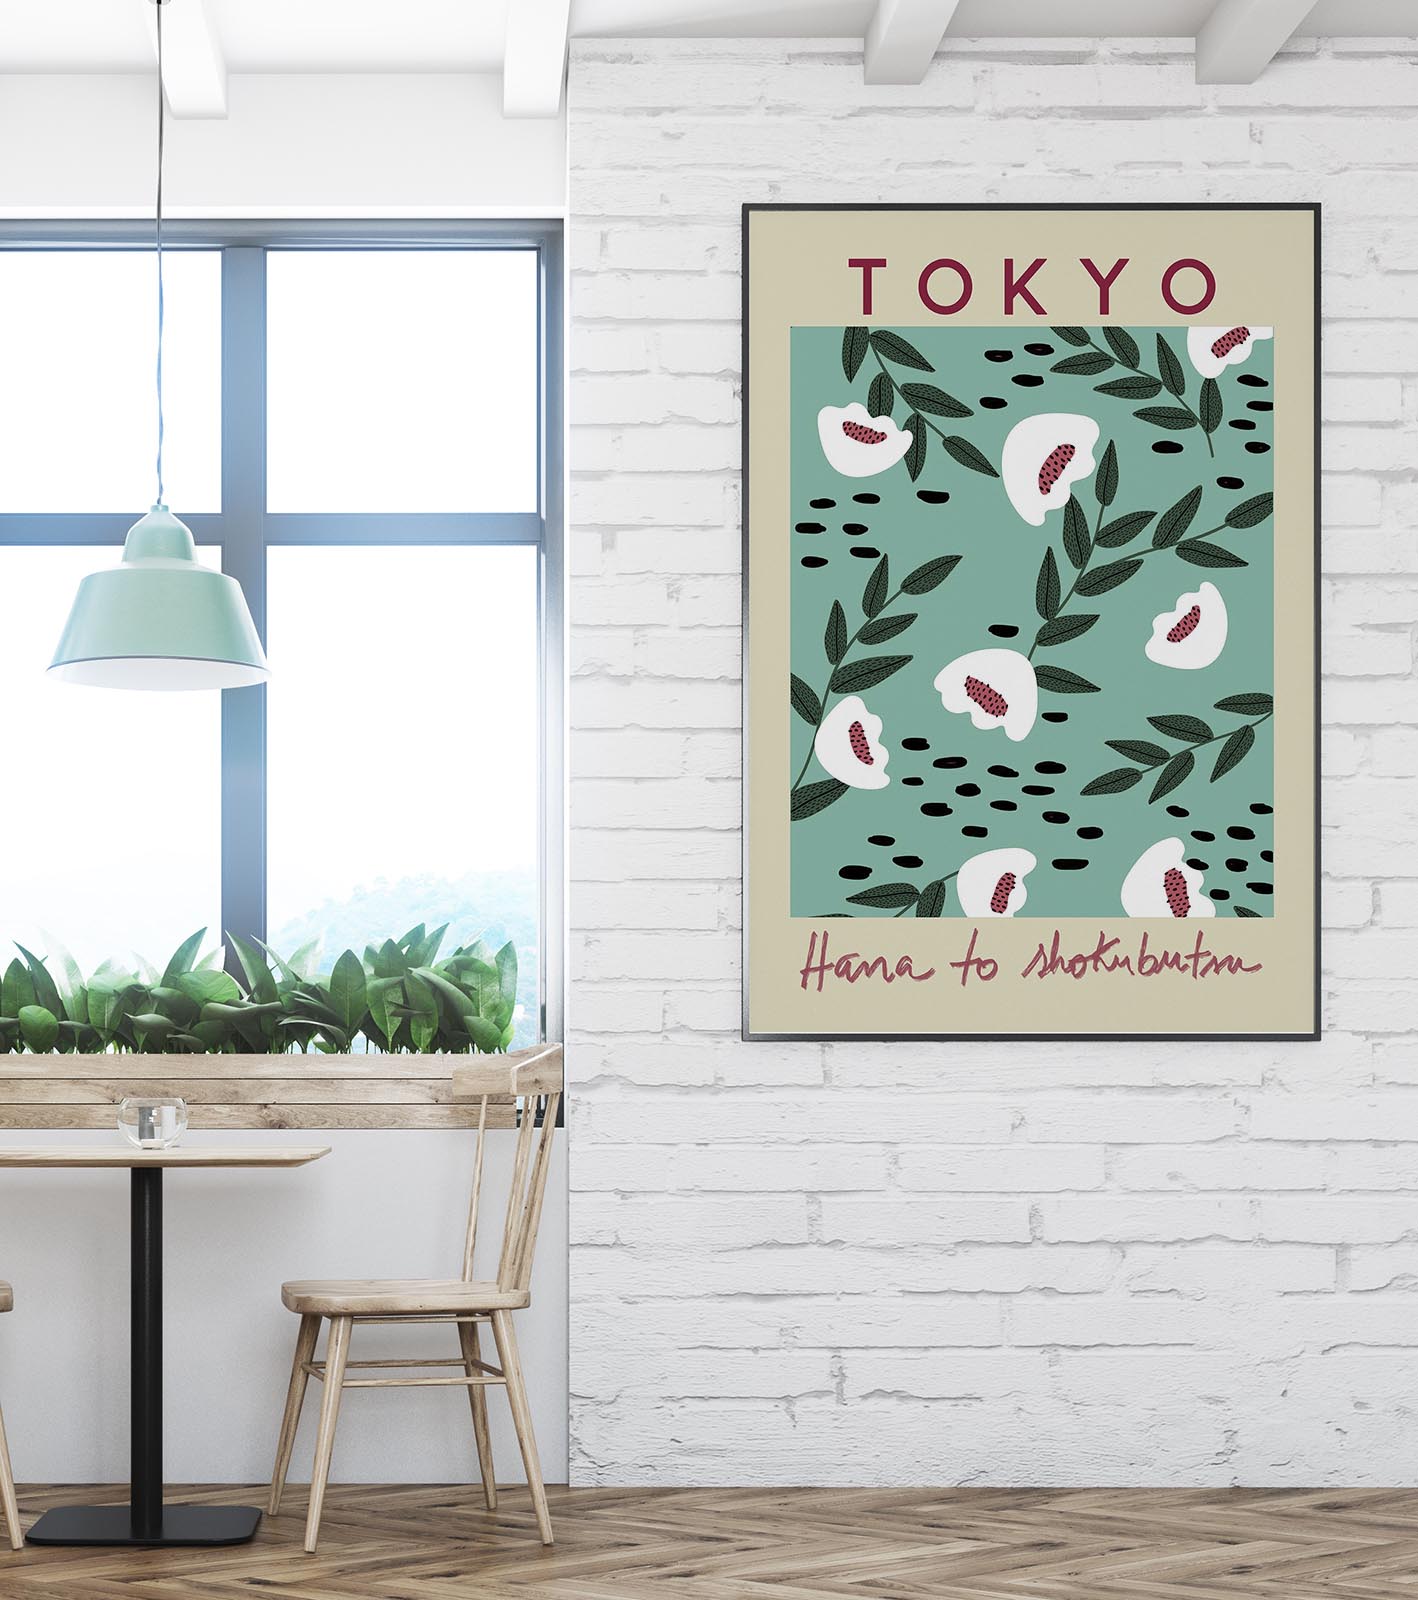 Tokyo Flower Market Nr 2 Poster